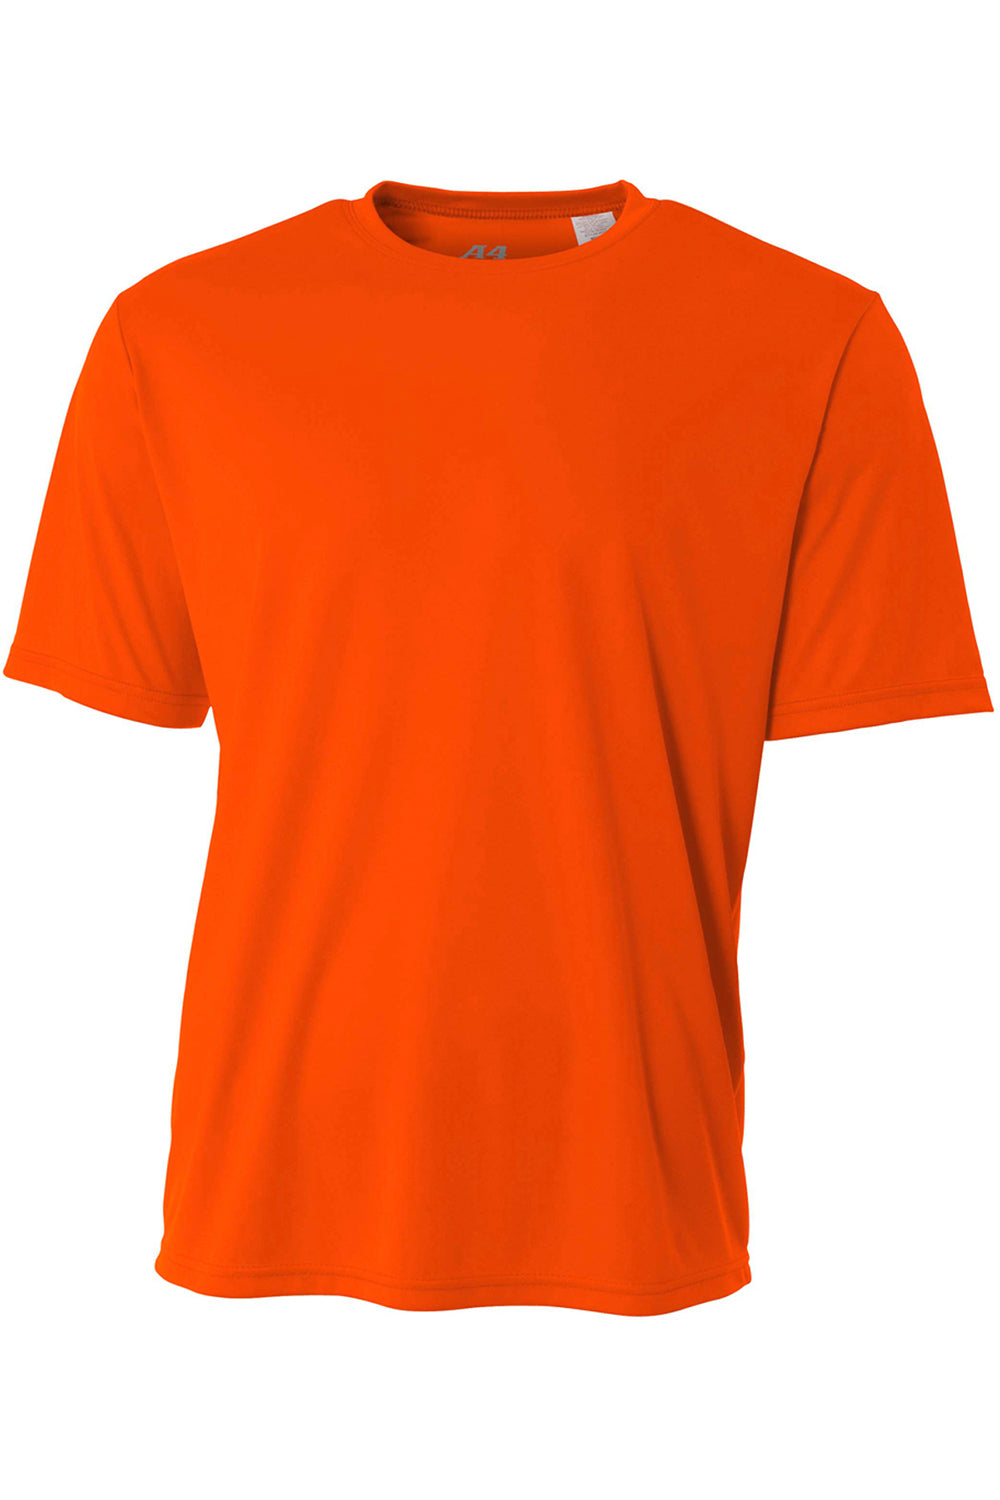 A4 N3142 Mens Performance Moisture Wicking Short Sleeve Crewneck T-Shirt Safety Orange Flat Front